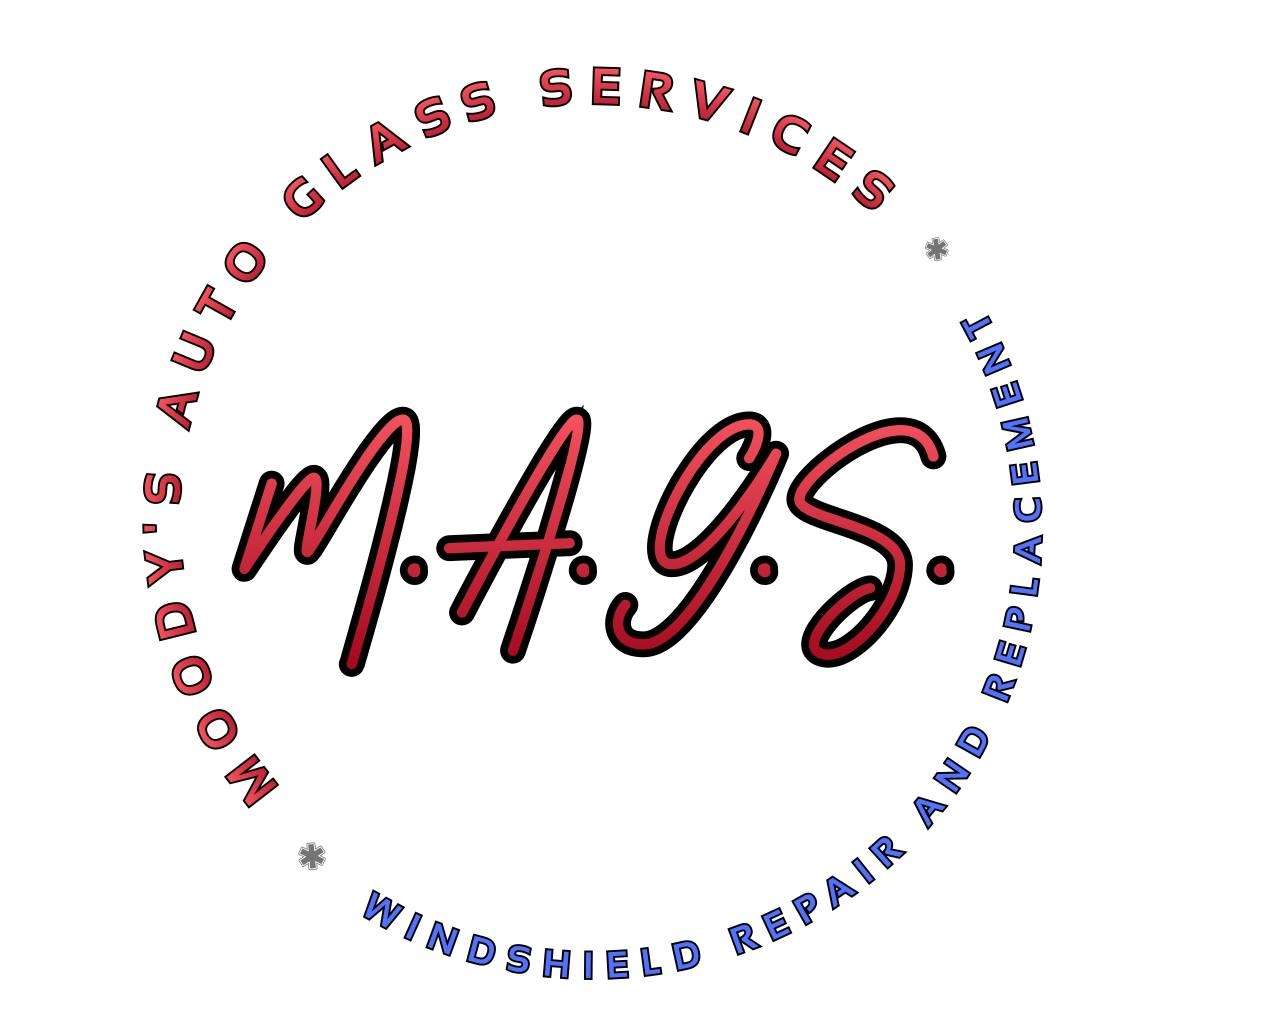 Moody's Auto Glass Services Logo